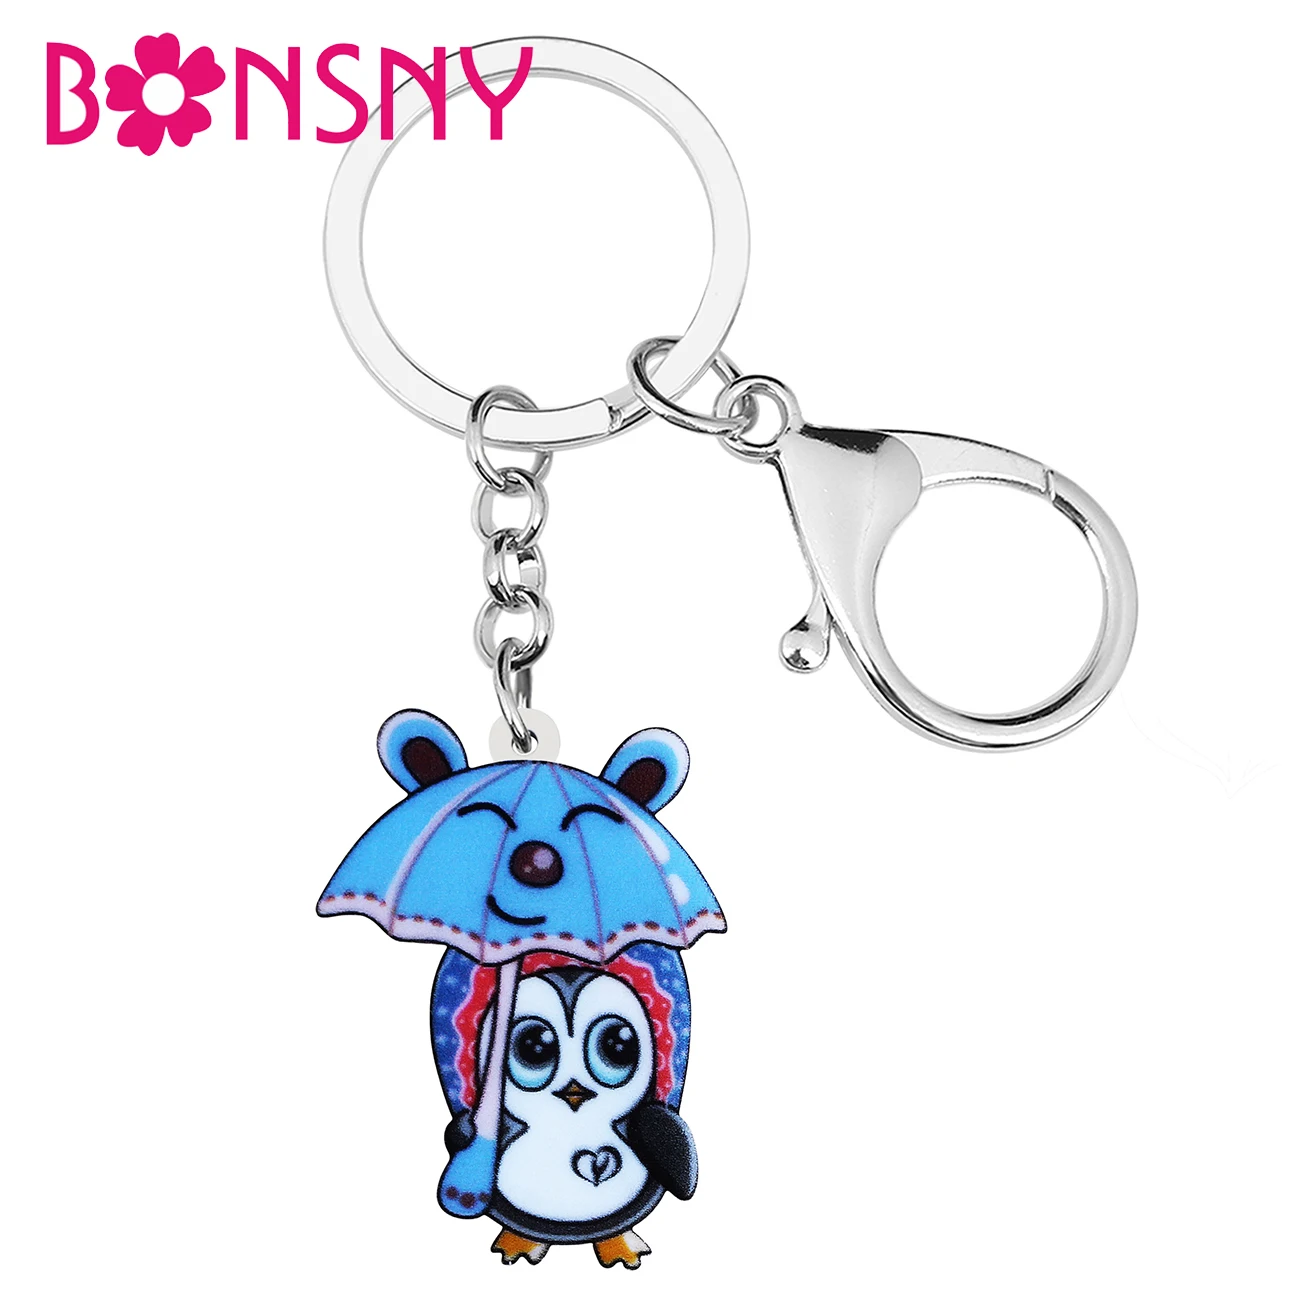 

BONSNY Acrylic Cute Blue Umbrella Big Eyes Penguin Keychains Fashion Purse Car Key Chain Ring Jewelry For Women Teen Girls Gifts